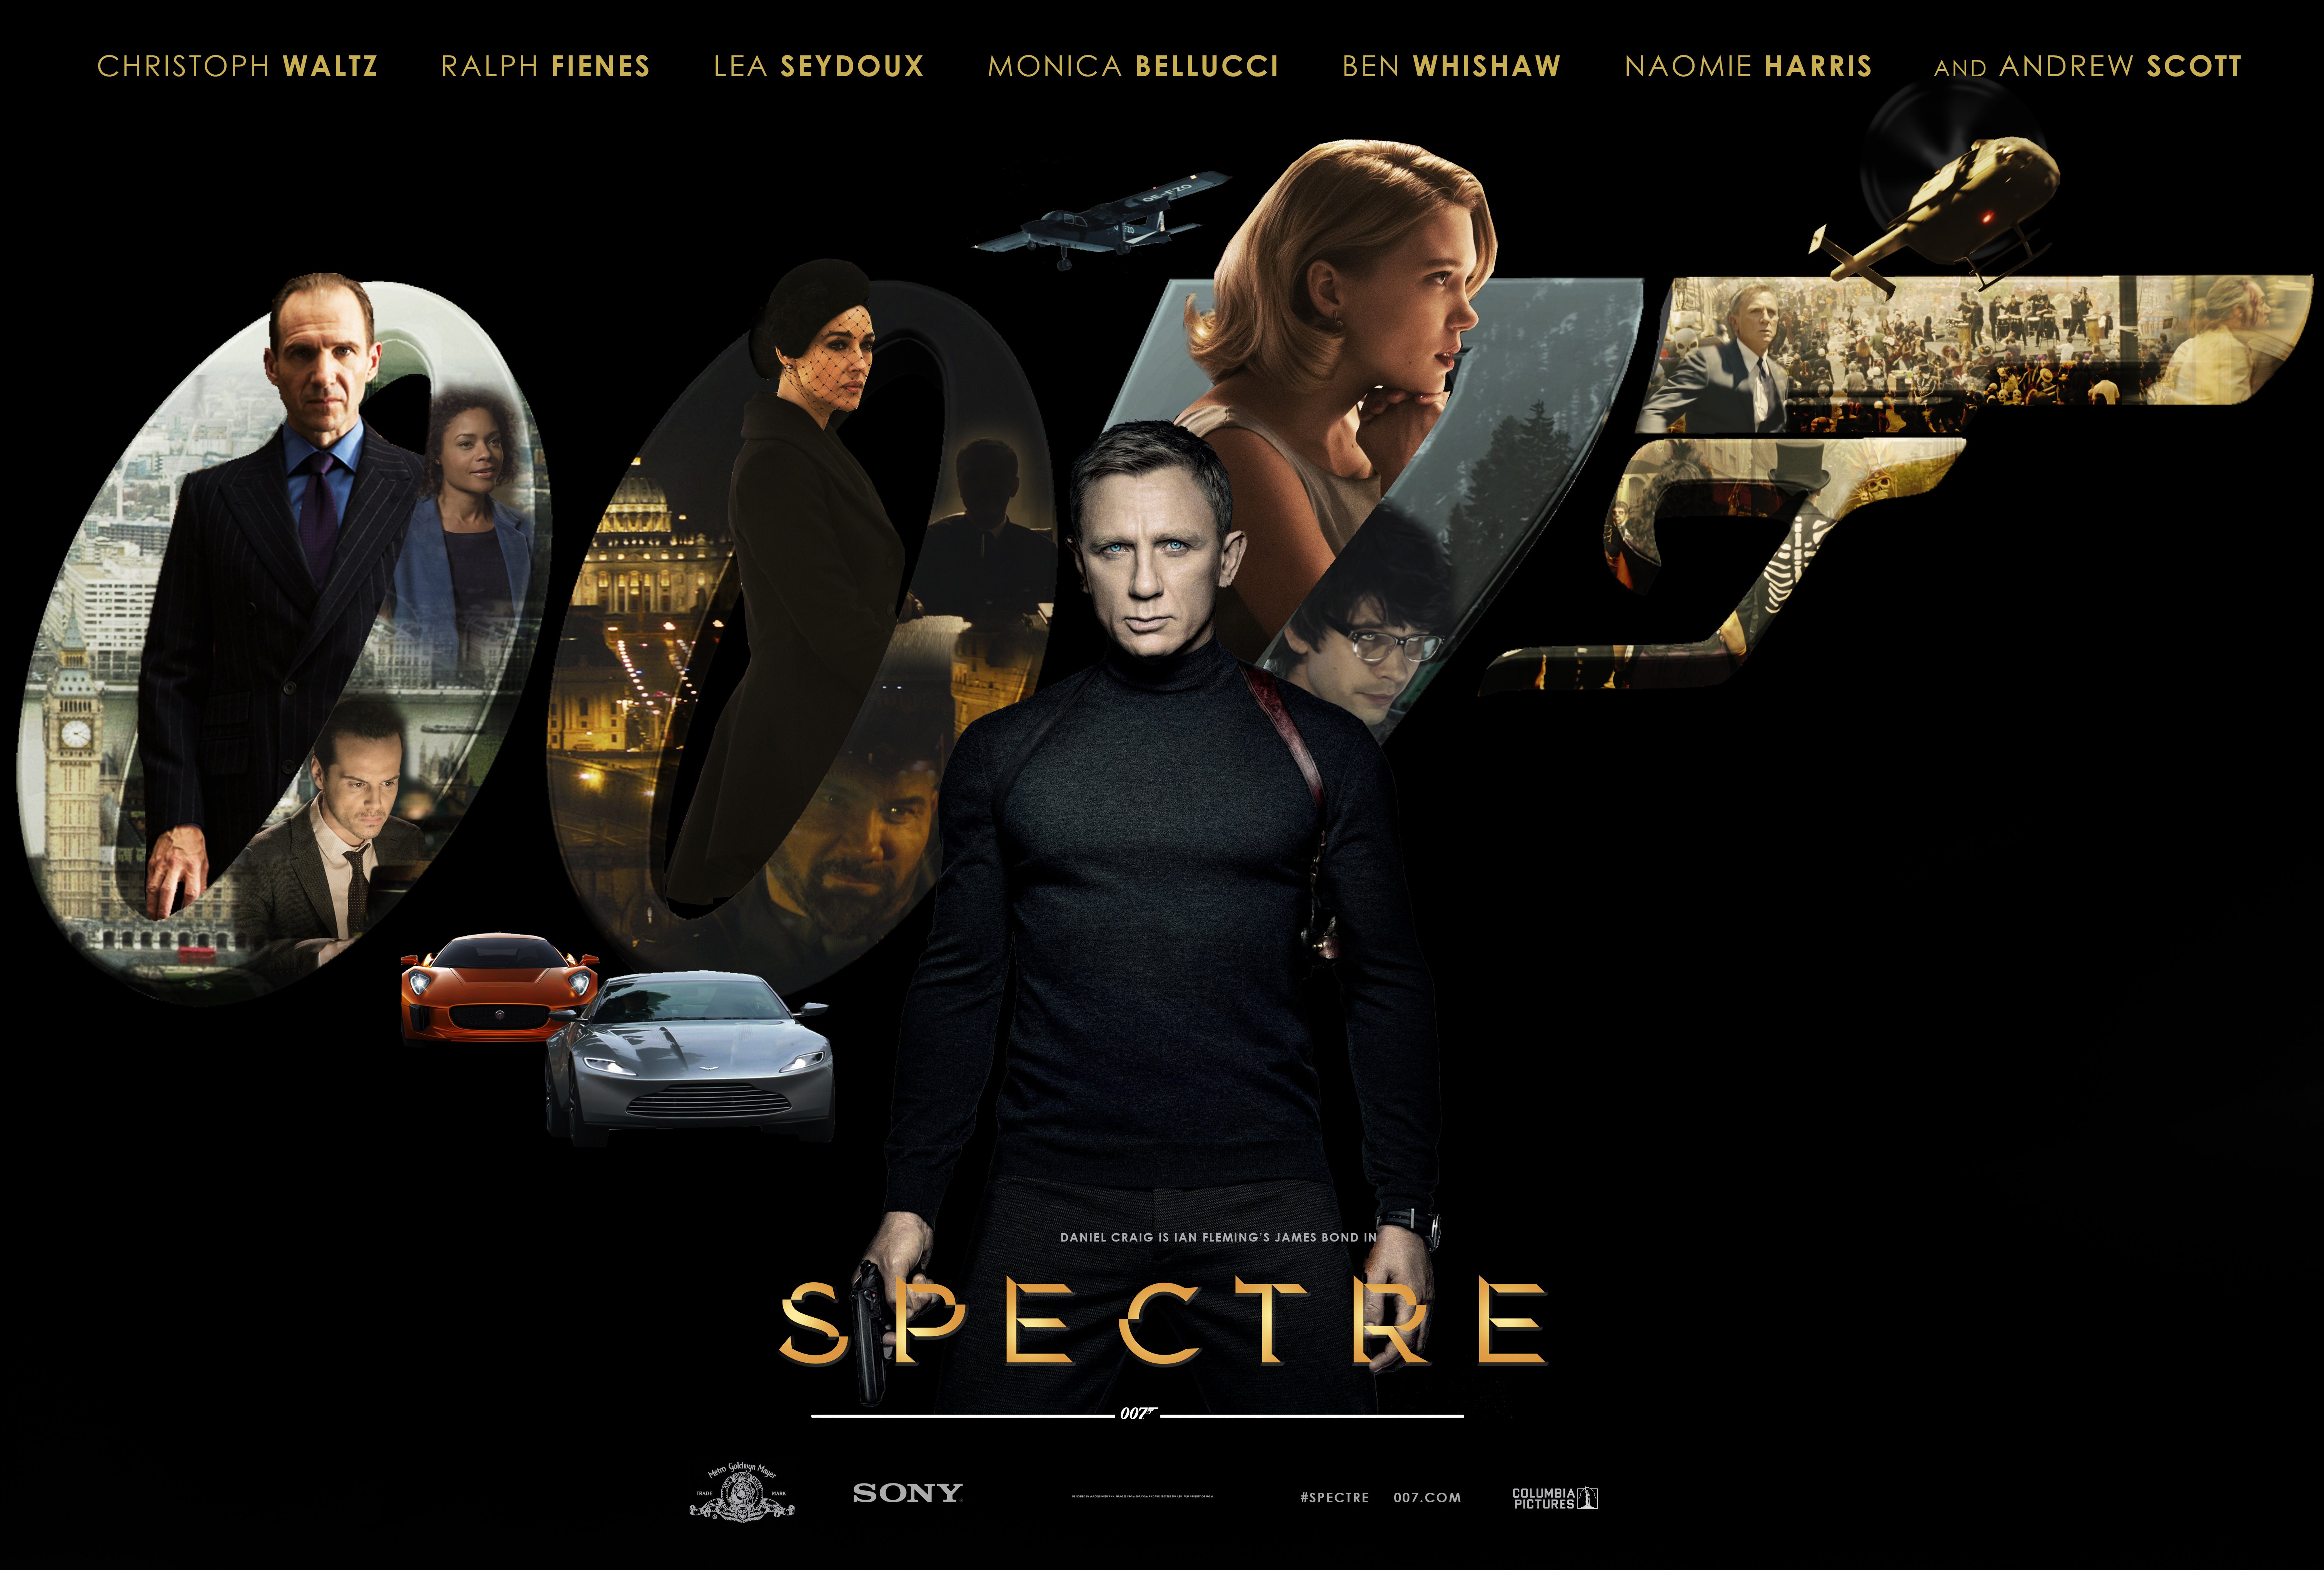 007 spectre movie time